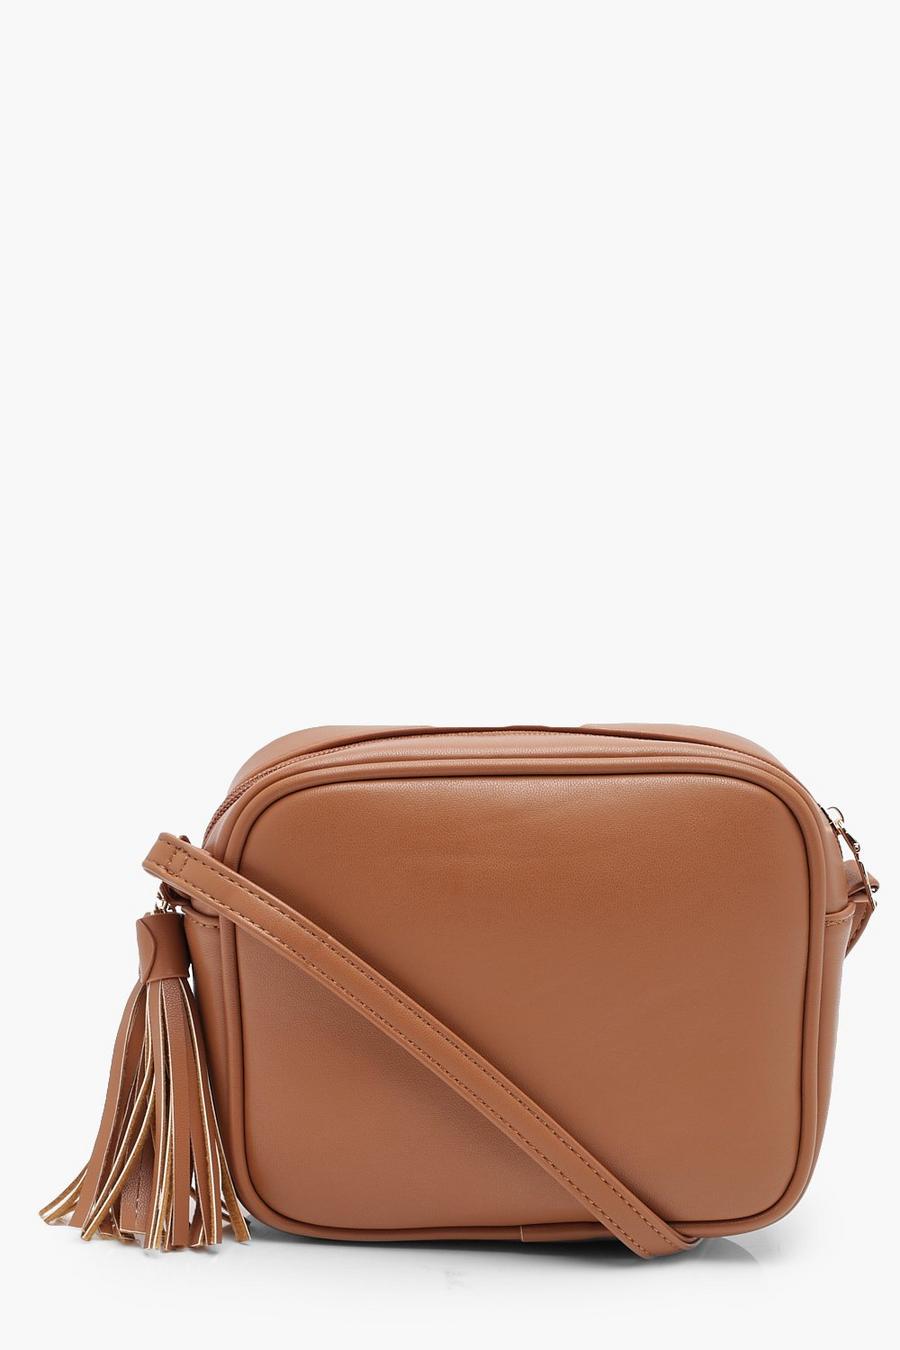 Tan brown PU Zip Around Cross Body Bag With Tassel